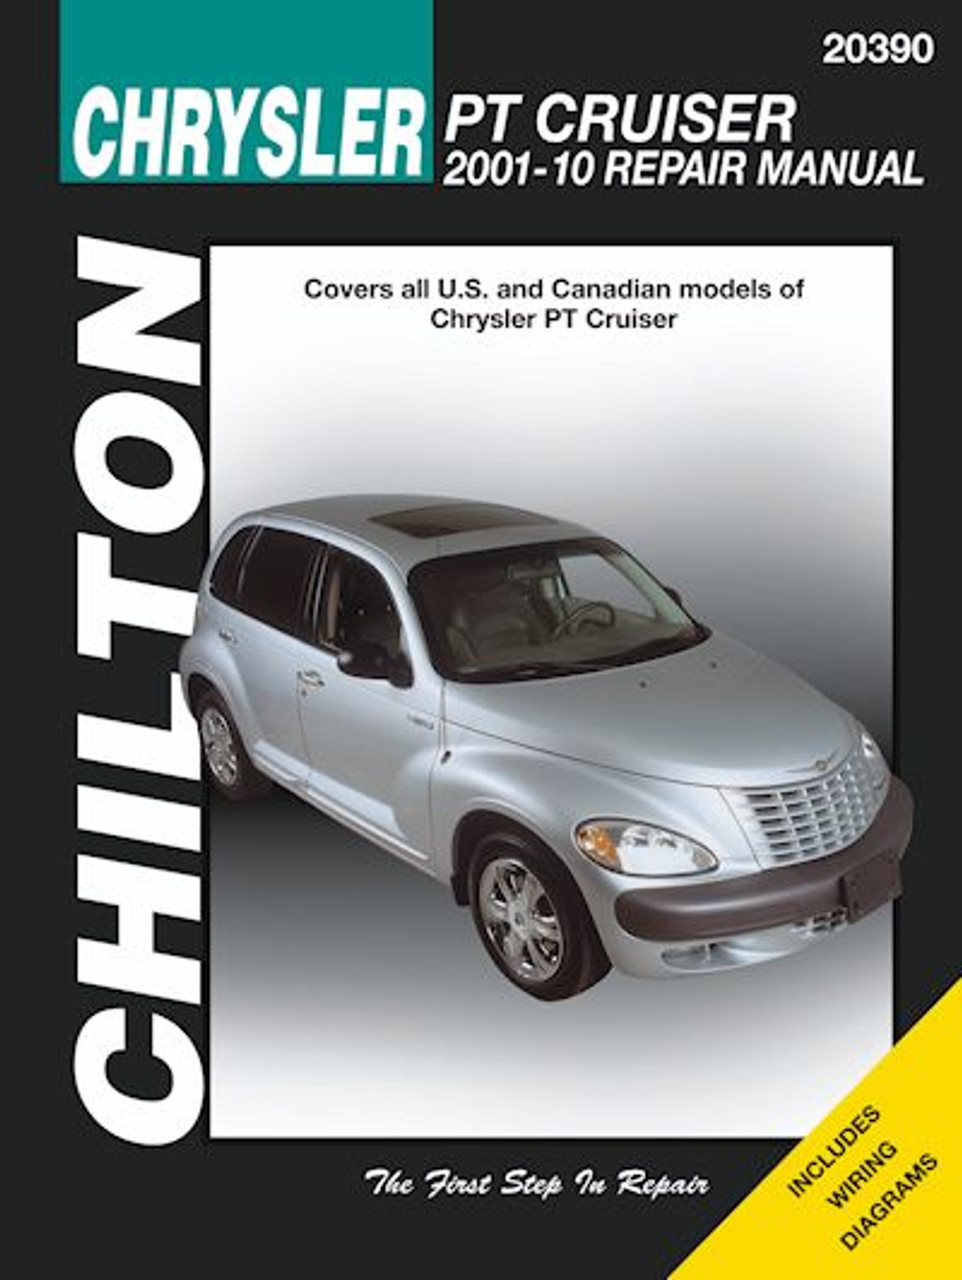 Chrysler PT Cruiser Repair Manual 2001-2010 - Chilton 20390